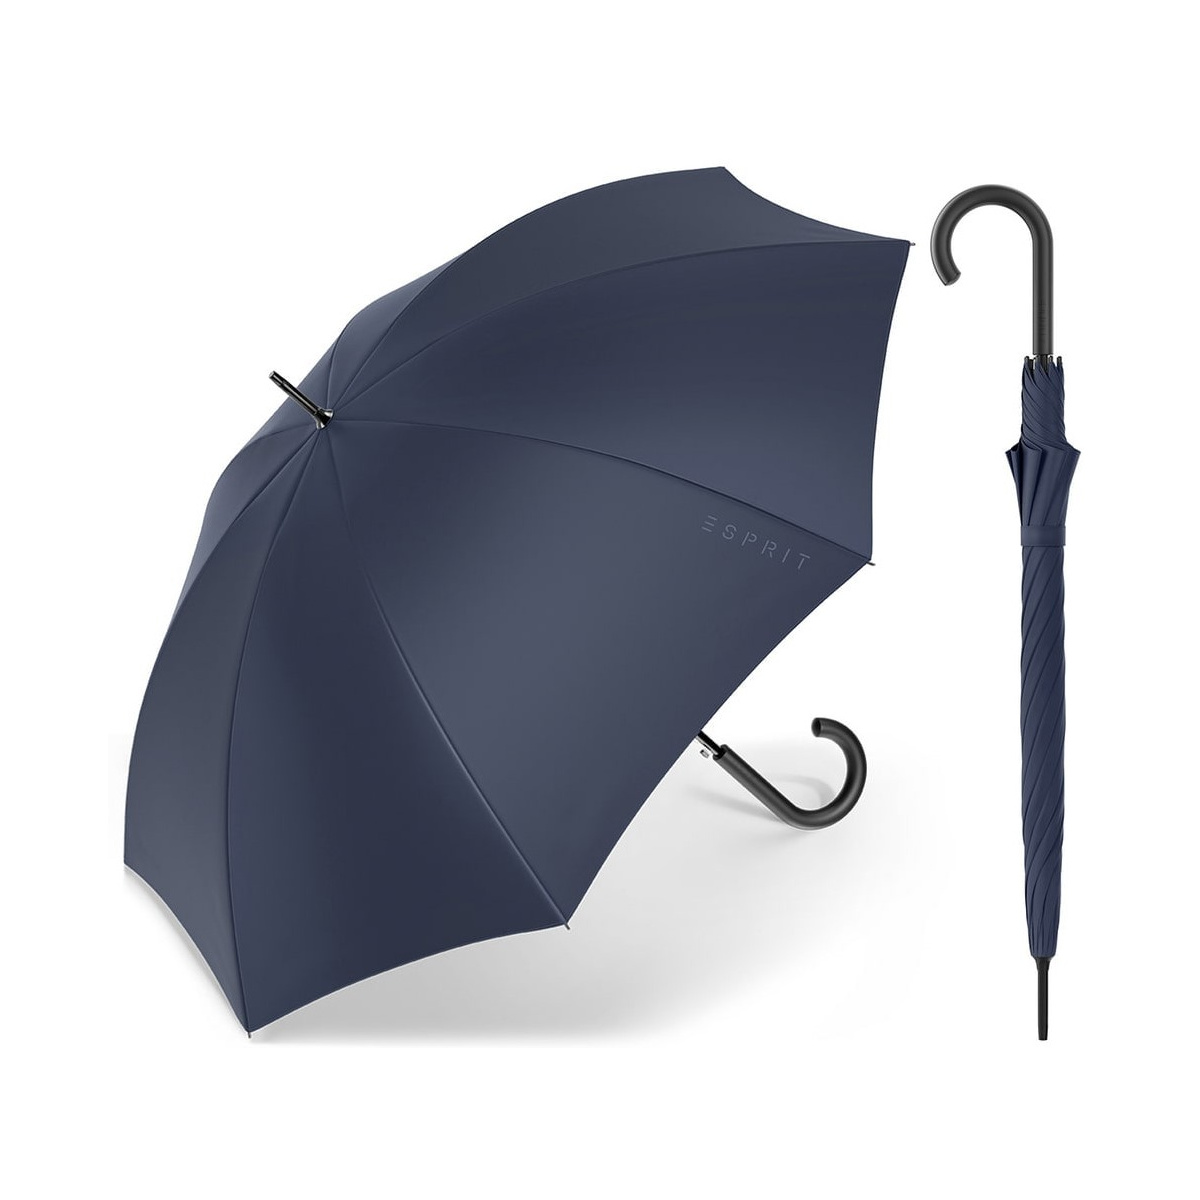 Parapluie Canne Long Marine - Esprit Reference : 17761